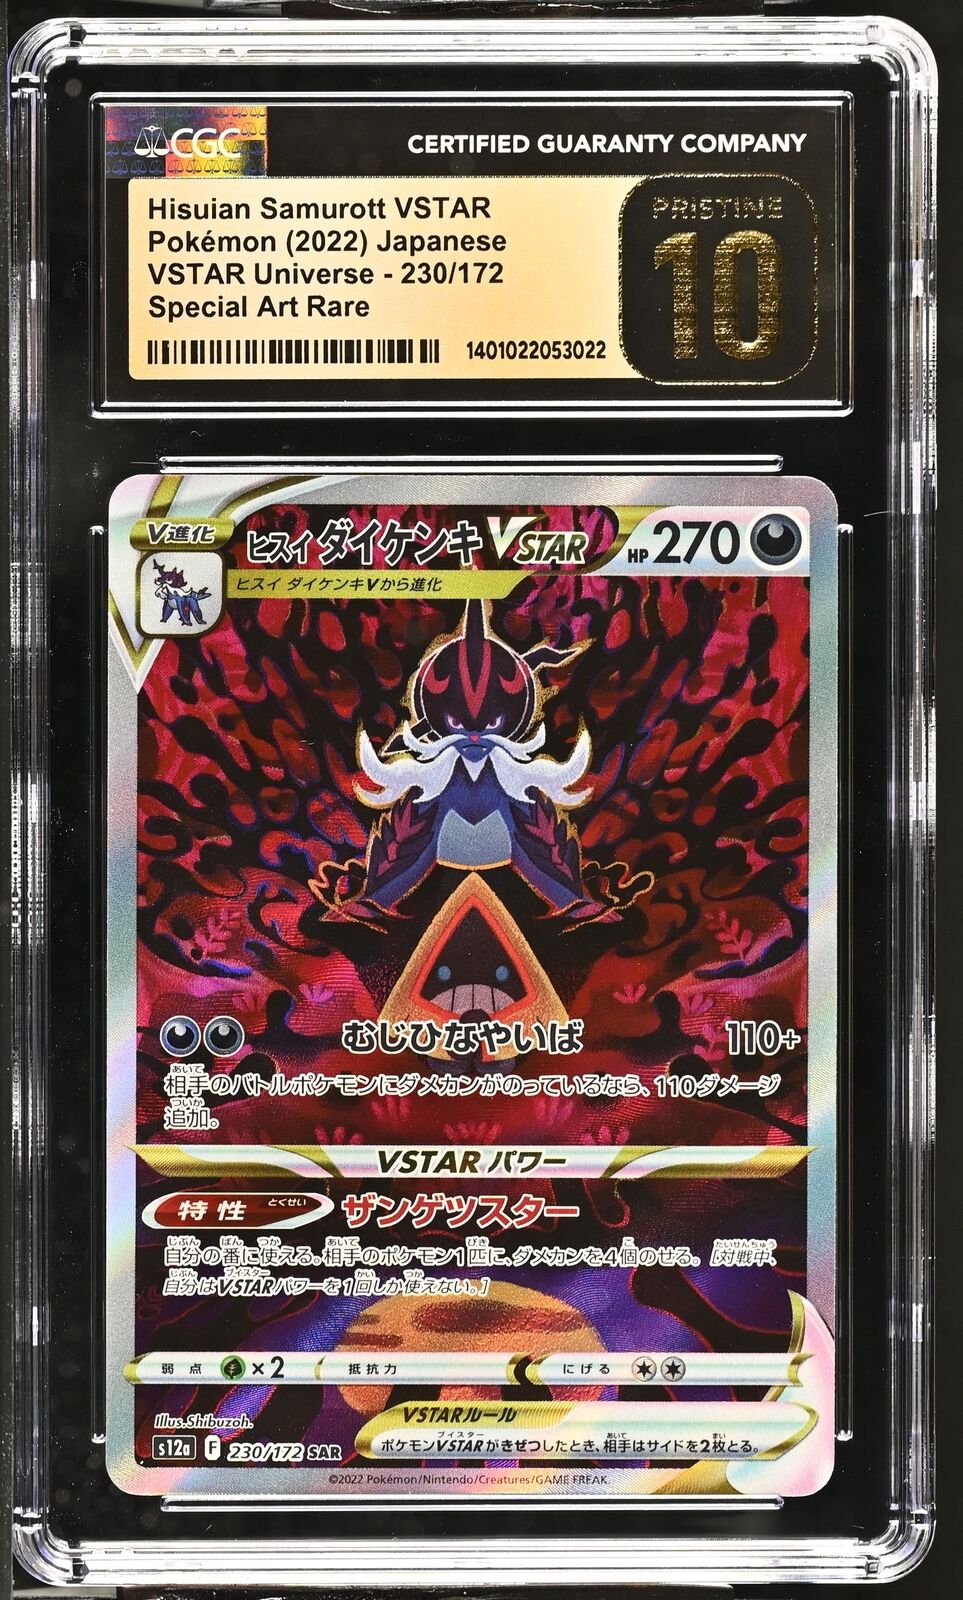 CGC 10 PRISTINE Japanese Pokémon 2022 Hisuian Samurott VSTAR 230/172 S12a